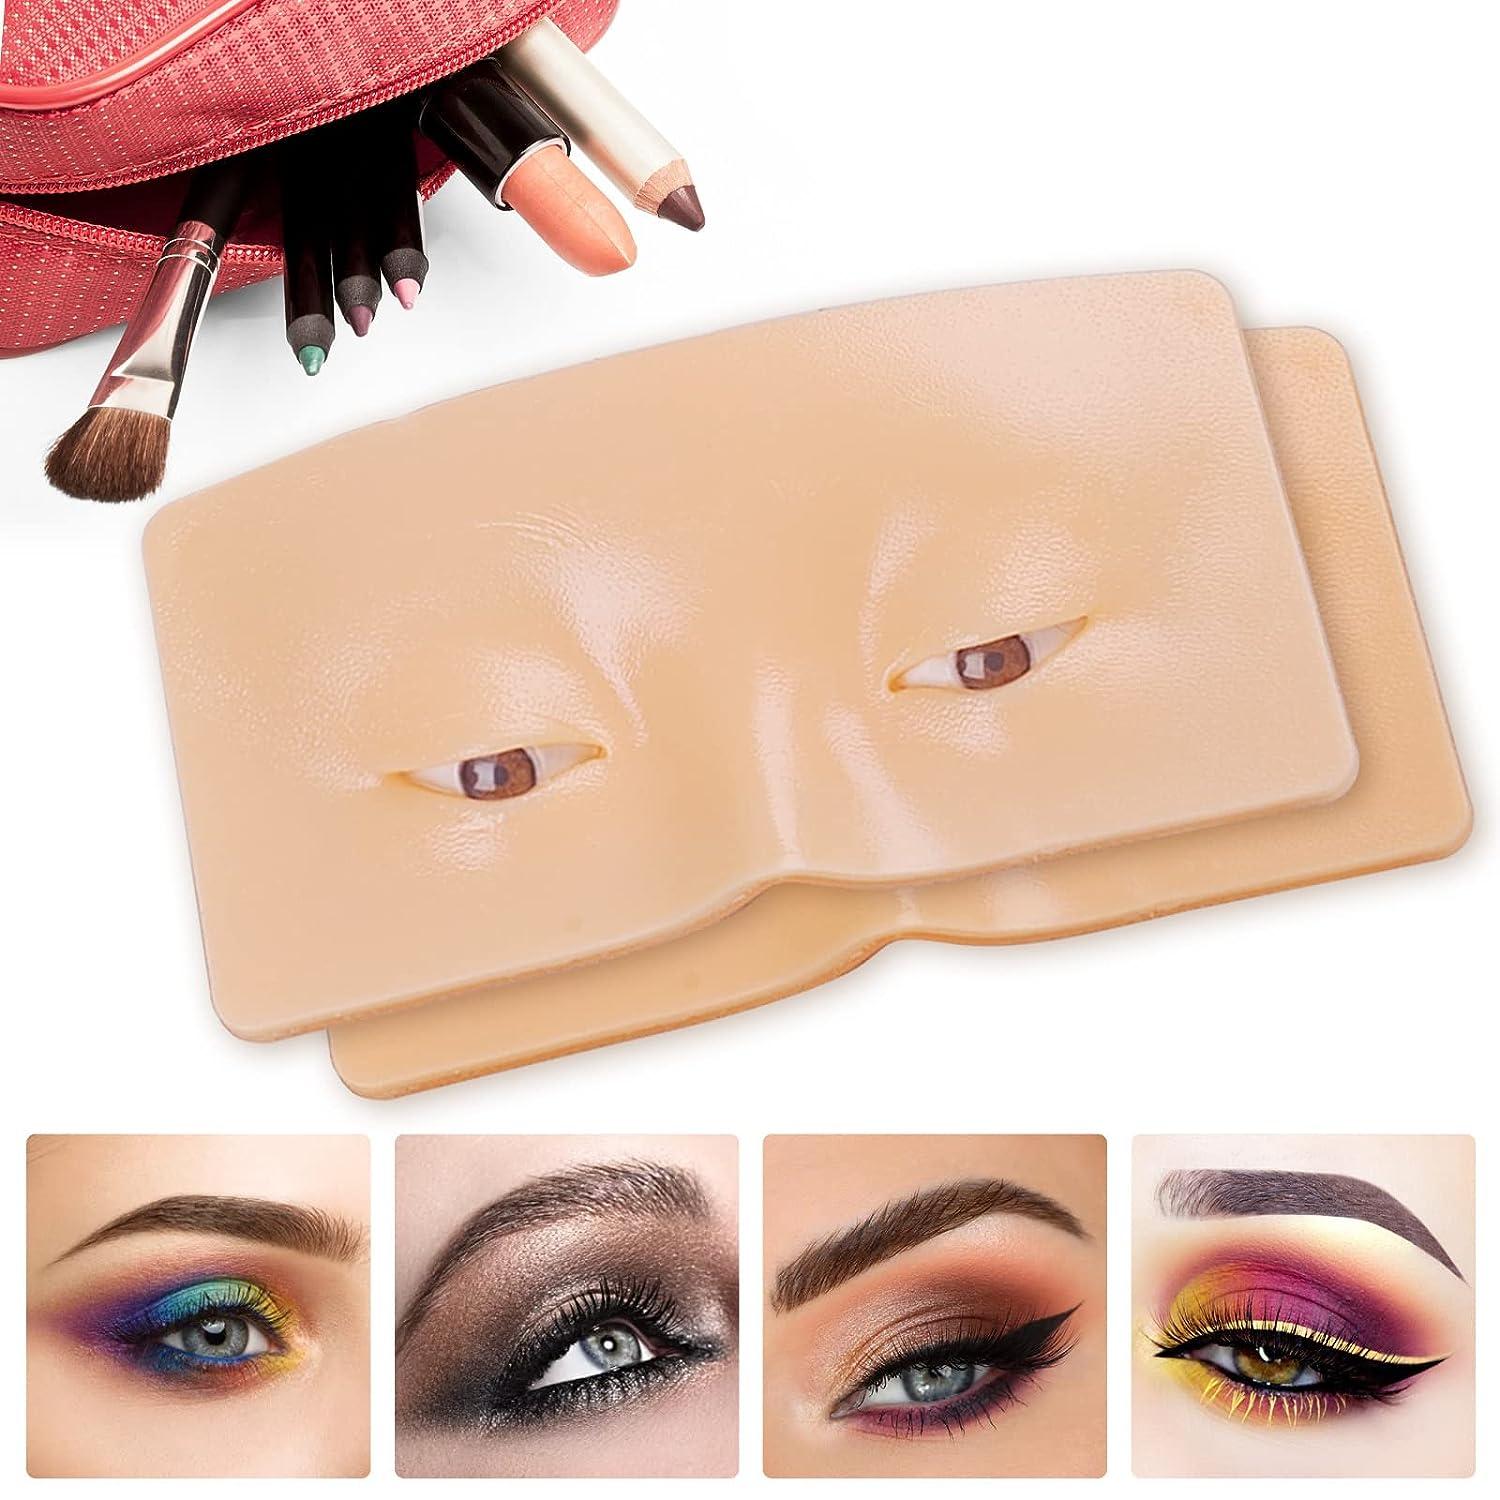 WBCBEC 1PCS Makeup Practice Face, 3D Board Realistic Pad for